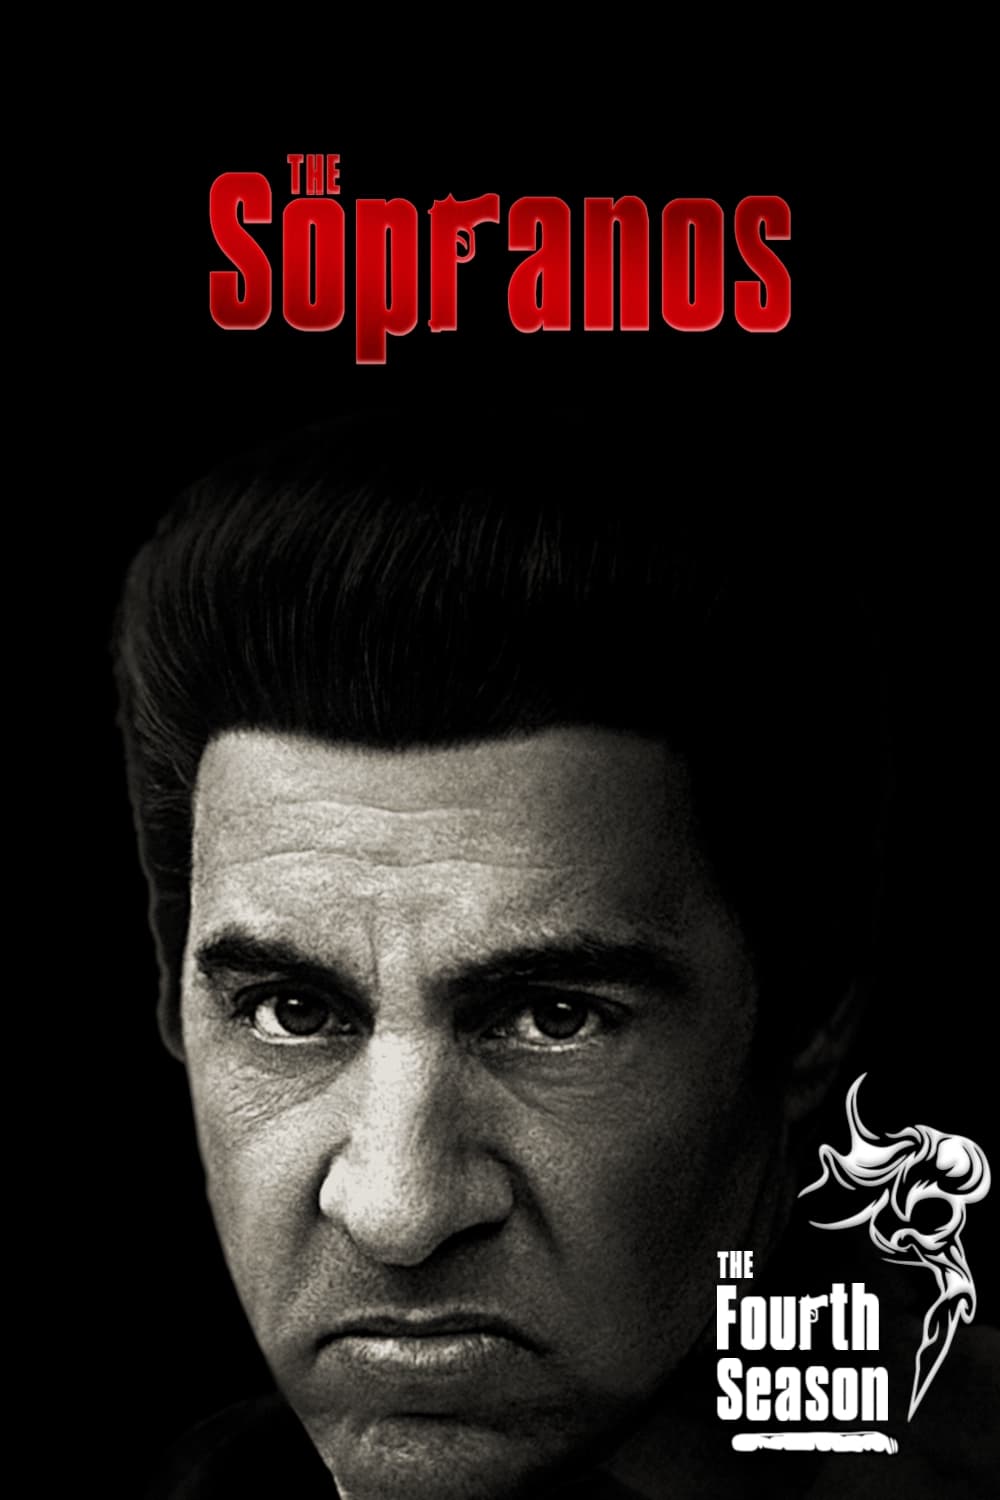 The Sopranos (1999) S04 BDRip 1080p HEVC x265 10-bit mp4a 5.1 NLSubs